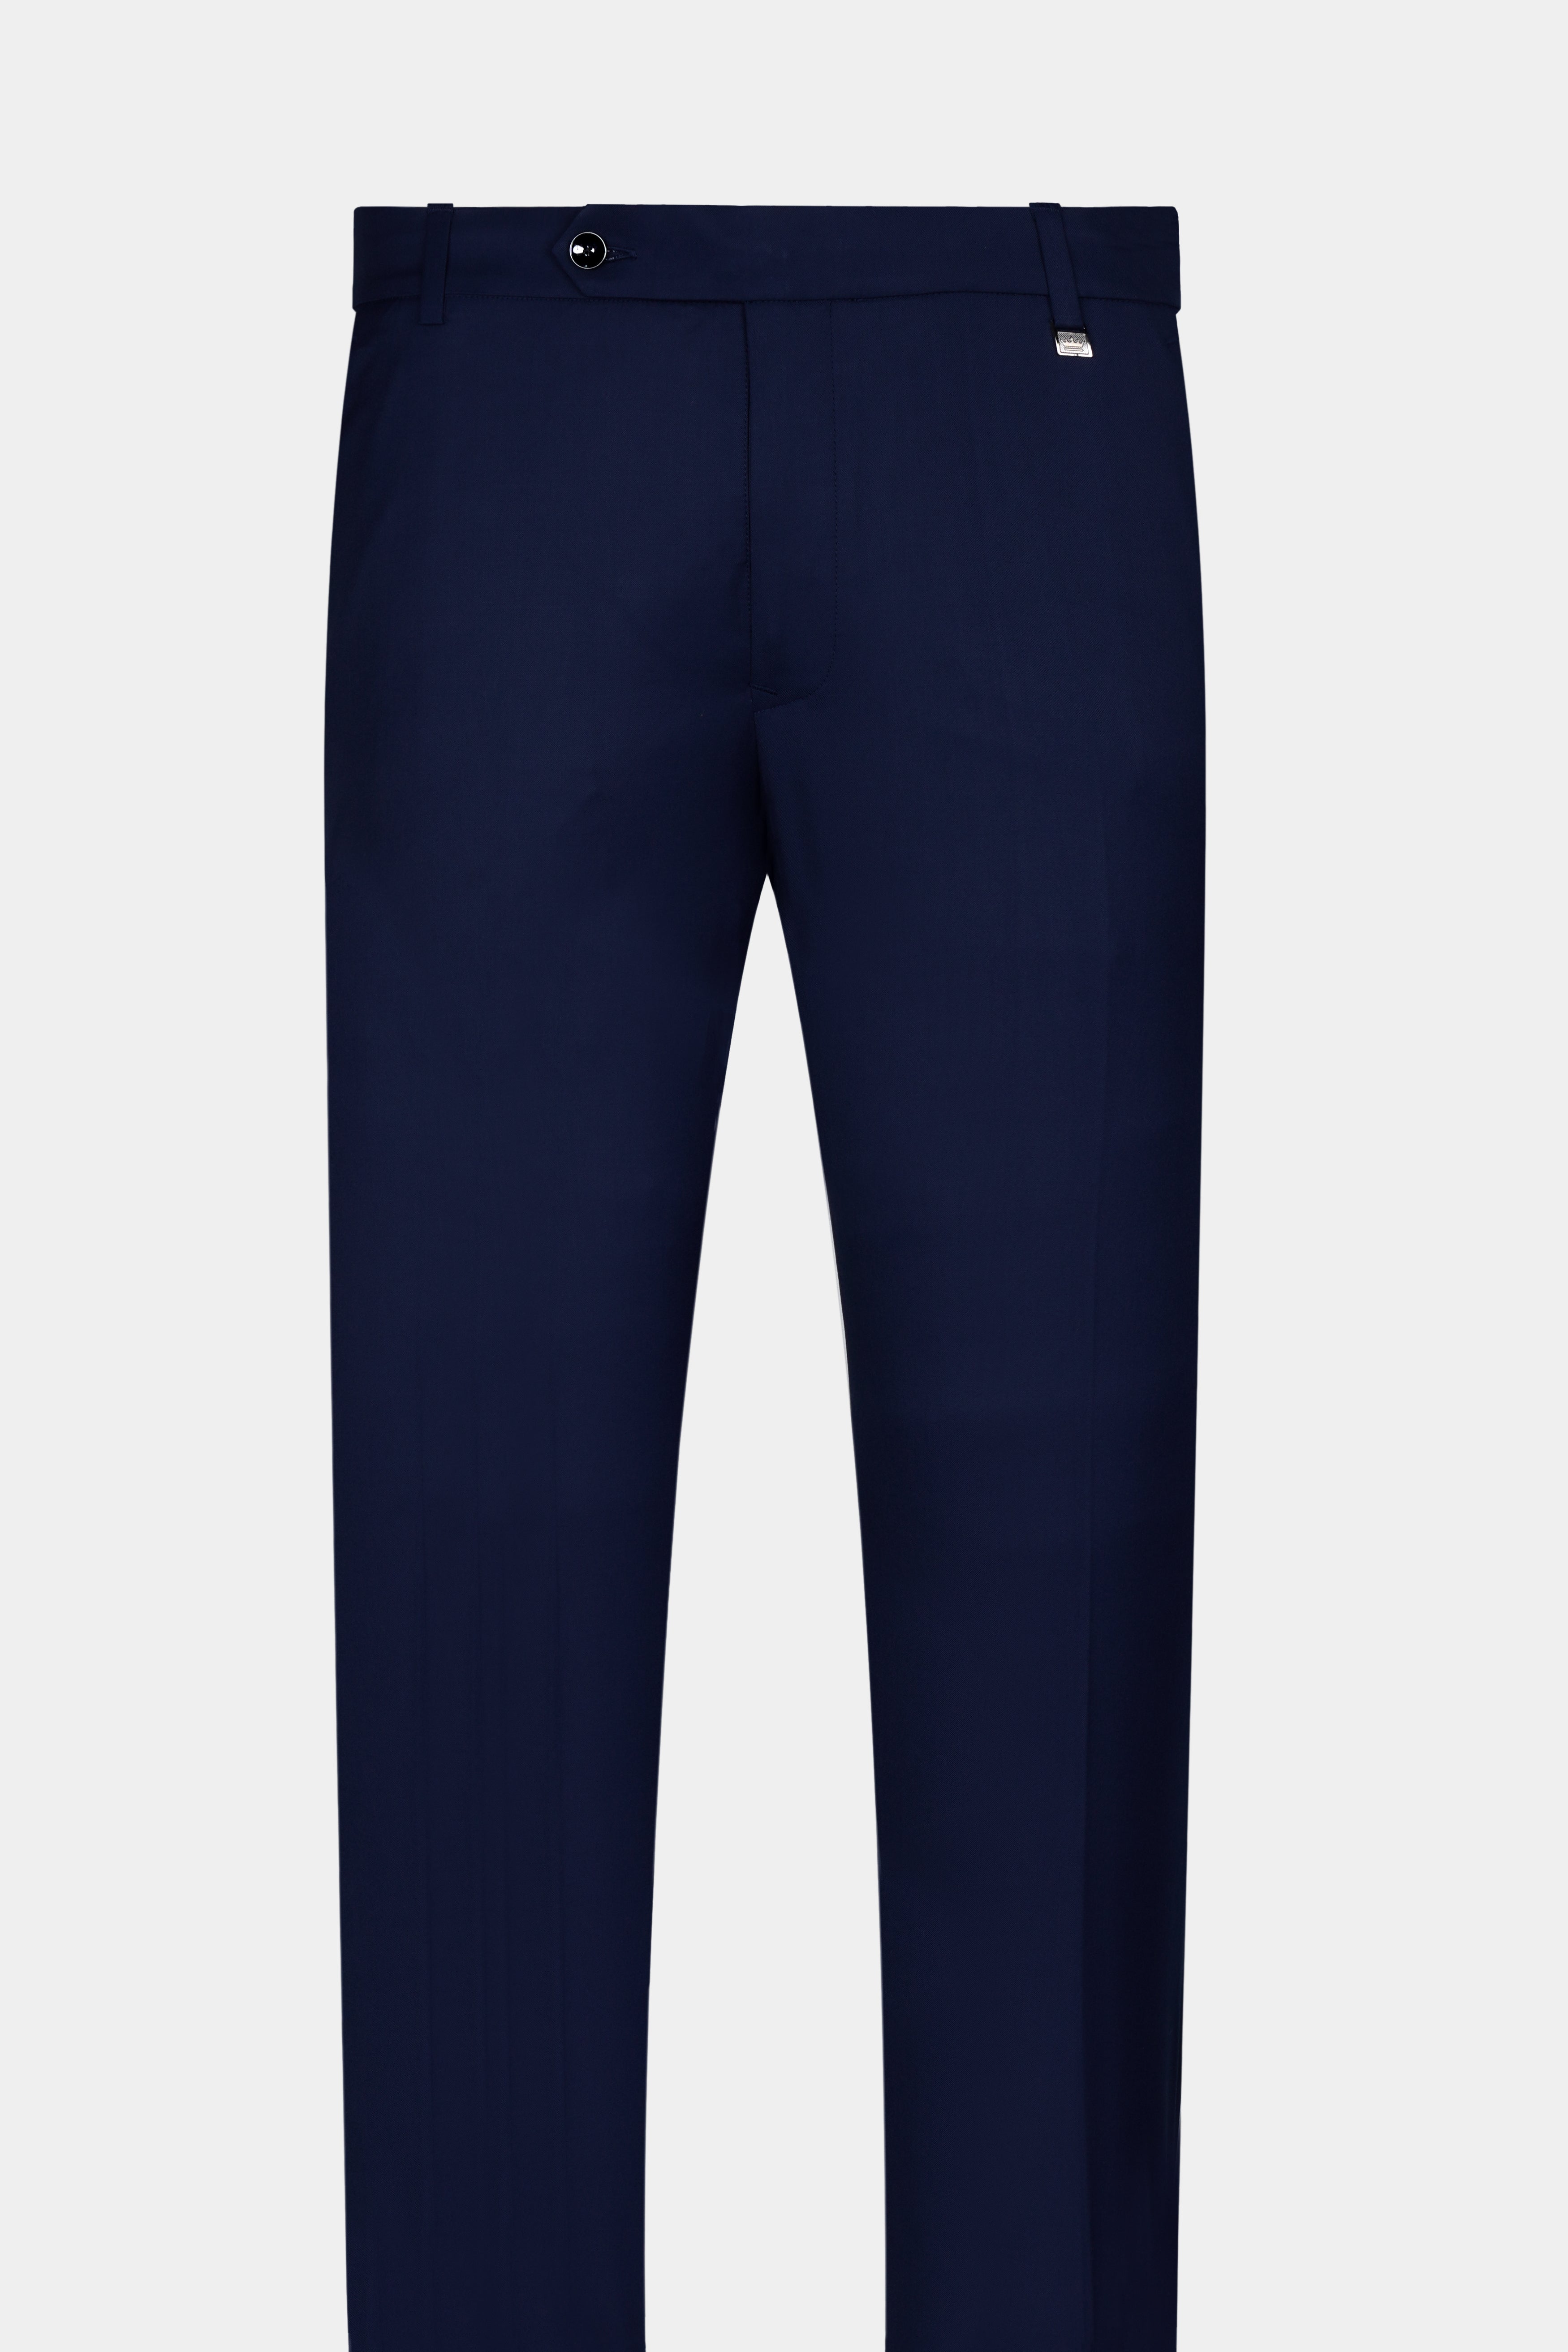 Buy blackberrys Men's Slim Pants (BP-DO-WELTA-B95# Charcoal at Amazon.in